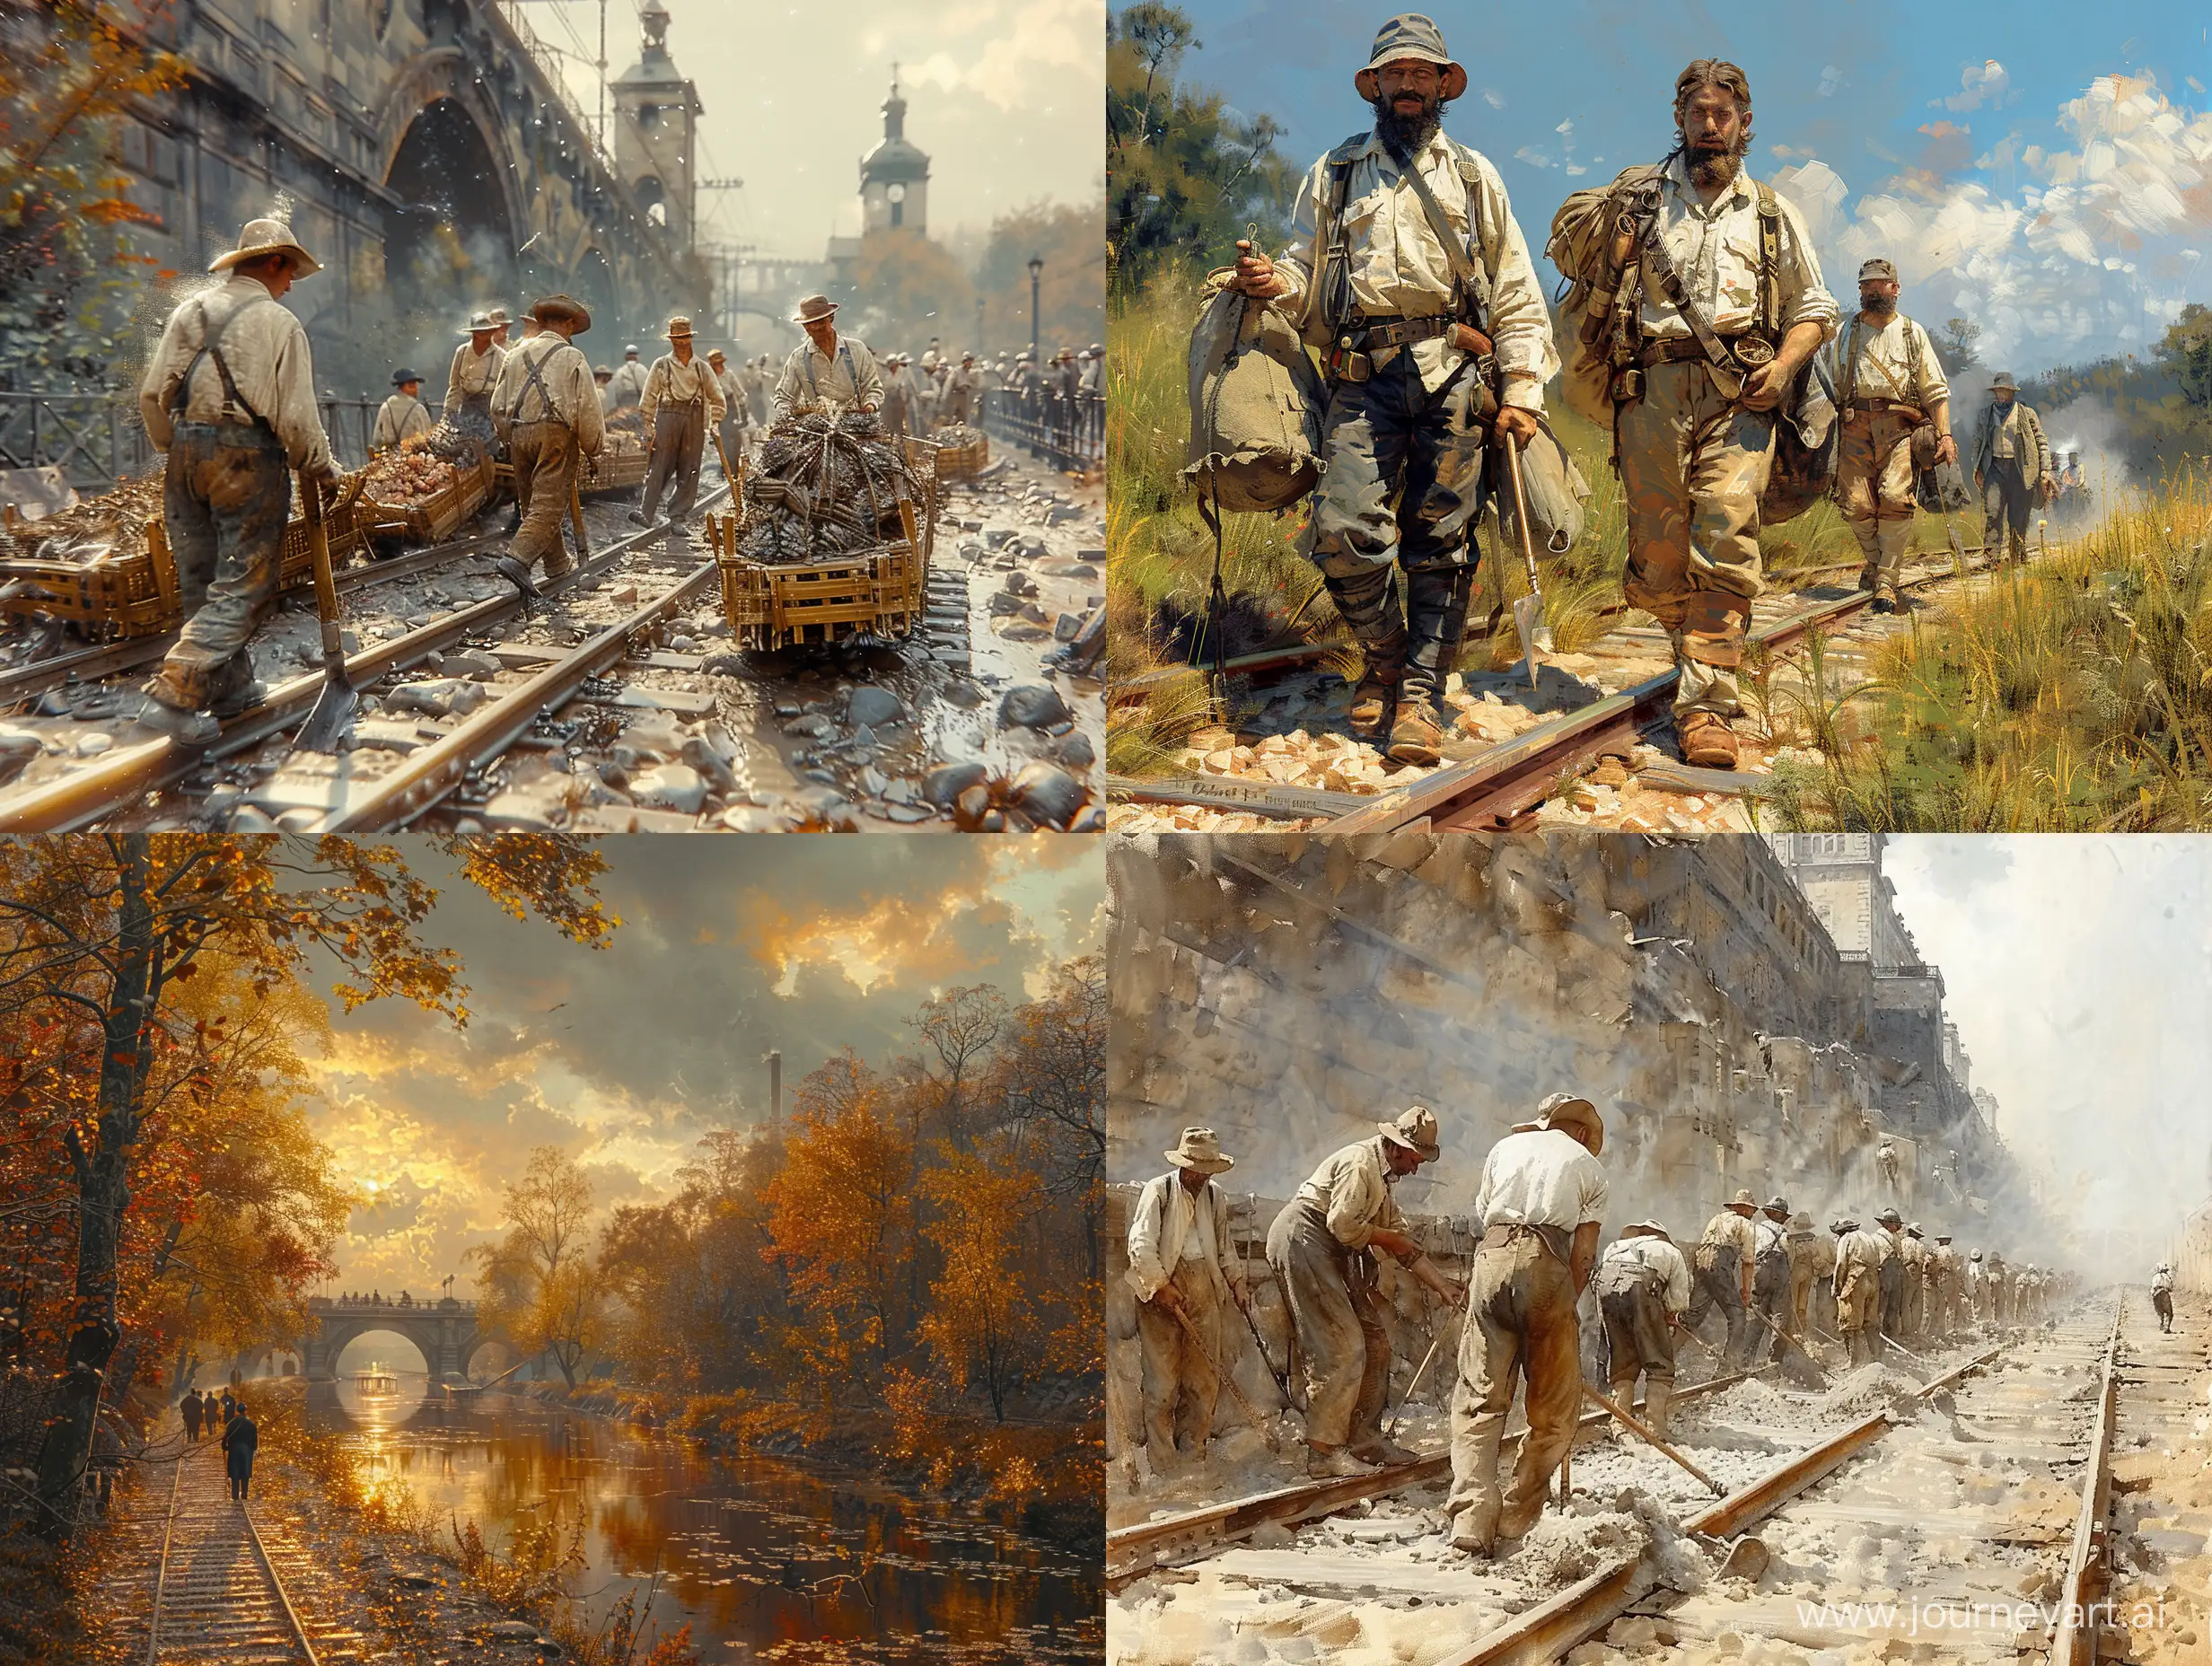 Historic-Realism-Railway-Workers-in-1845-Performing-Daily-Duties